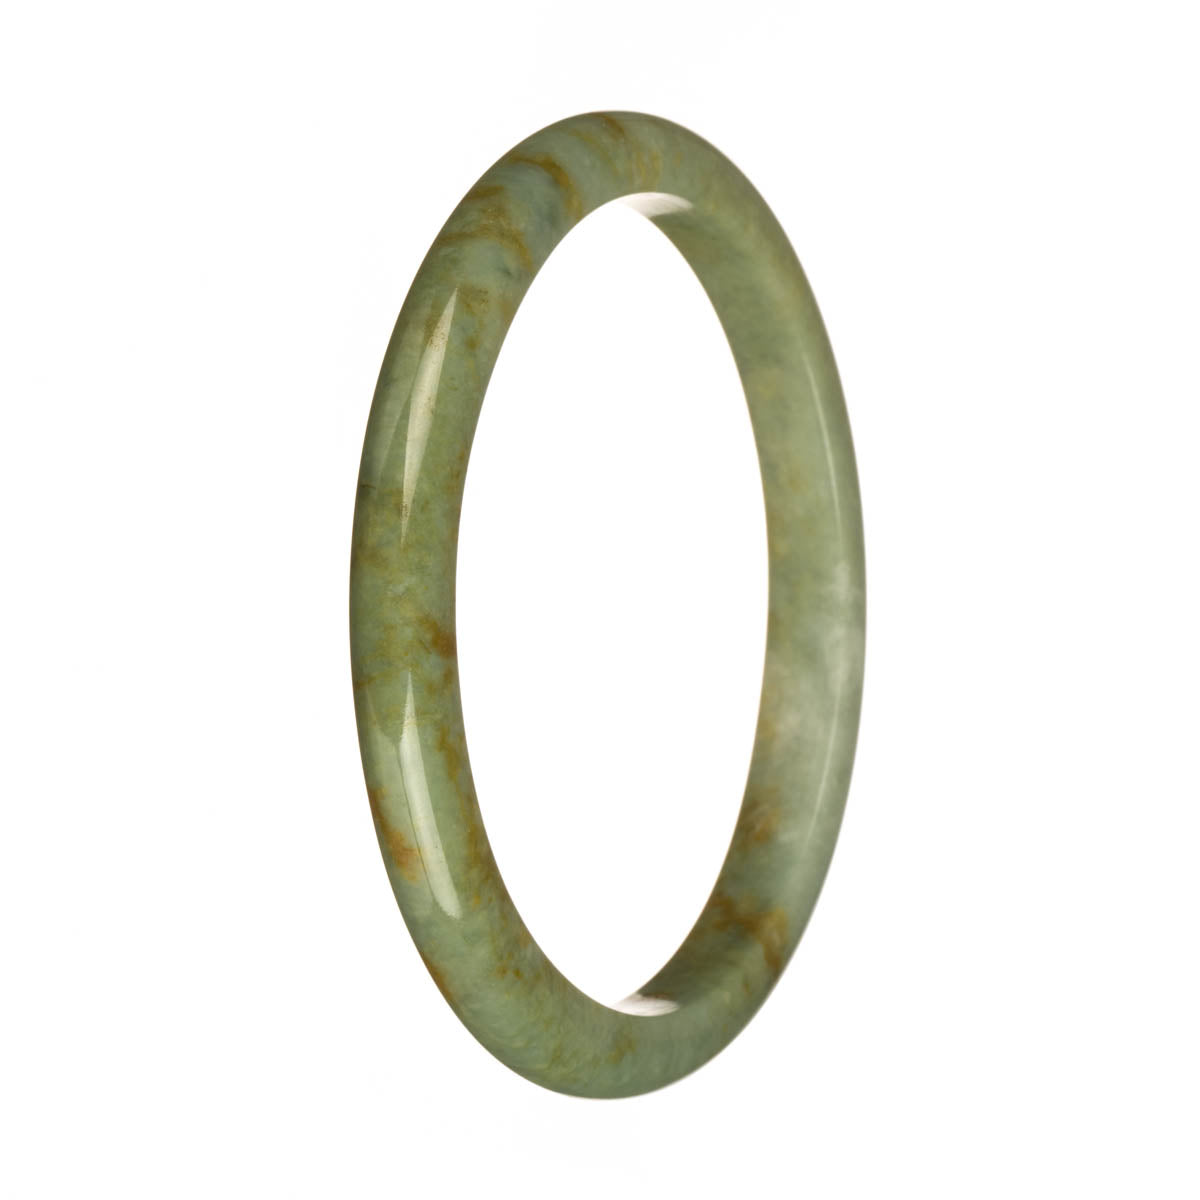 76.5mm Green with Brown Patterns Jade Bangle Bracelet